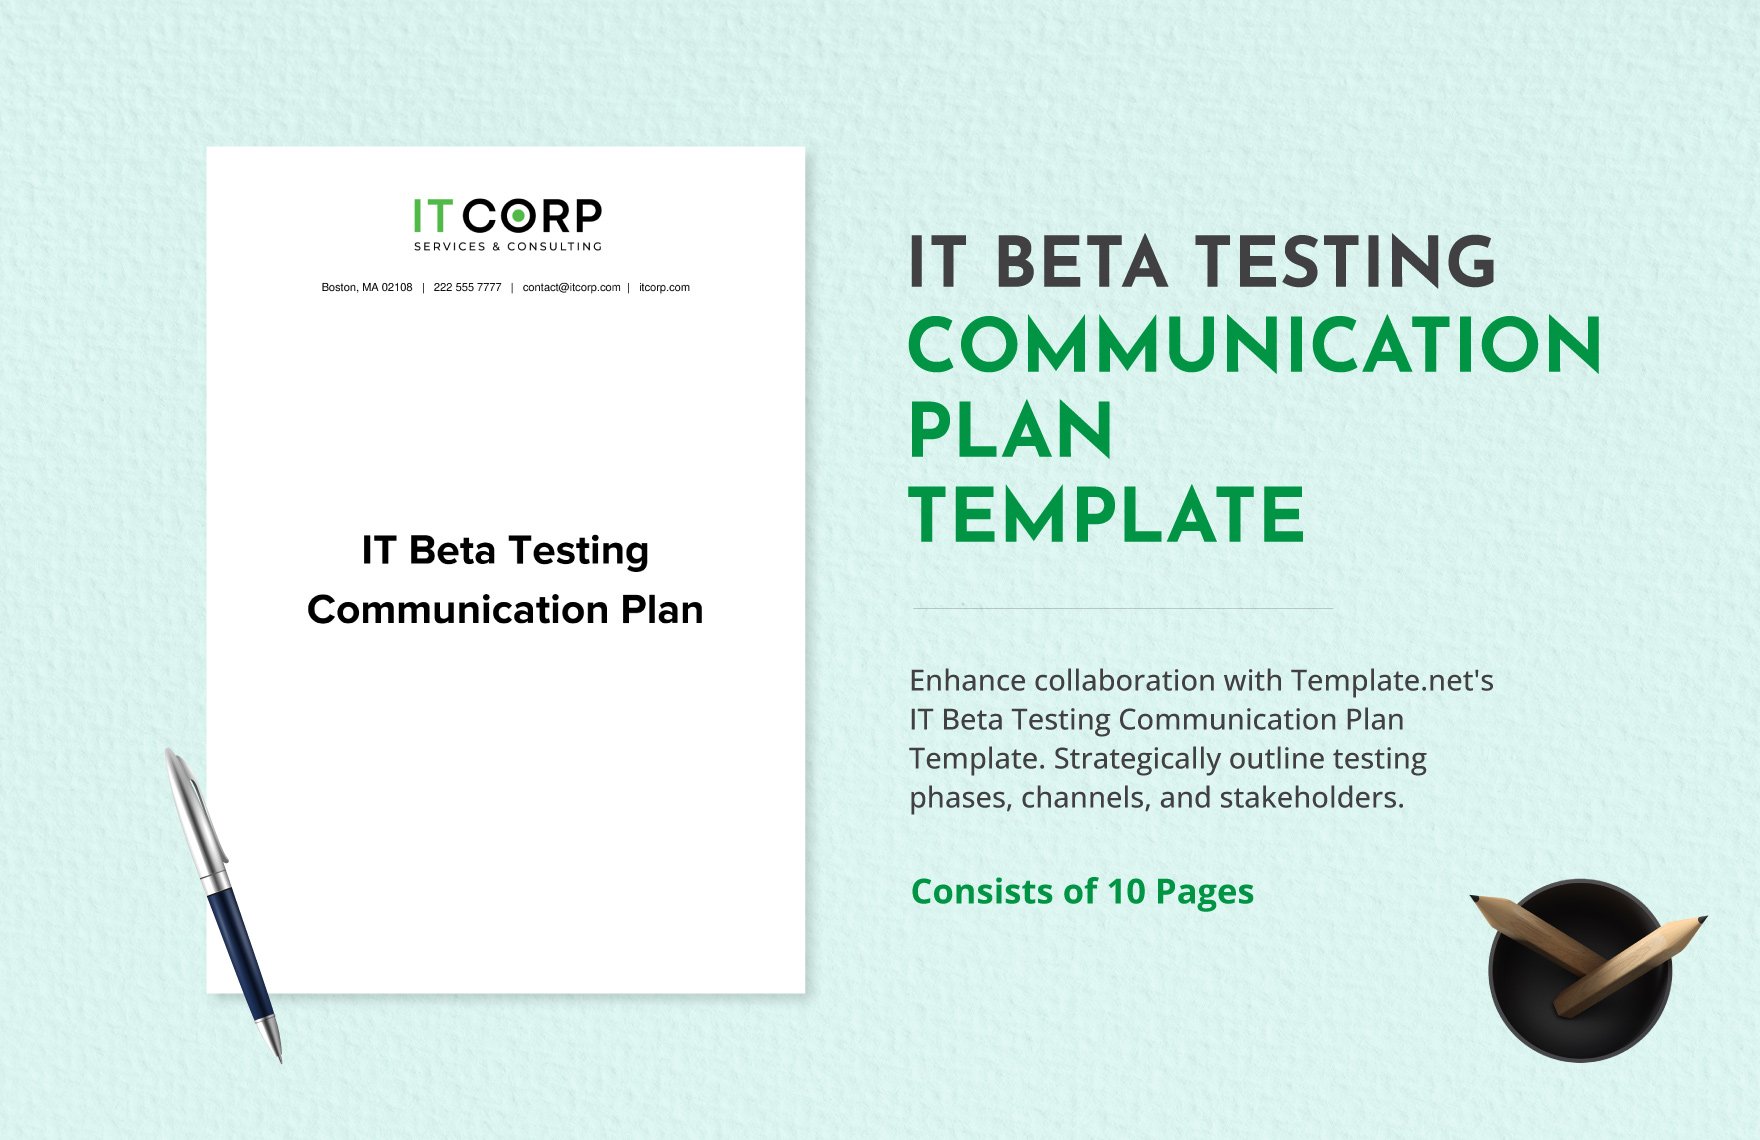 IT Beta Testing Communication Plan Template